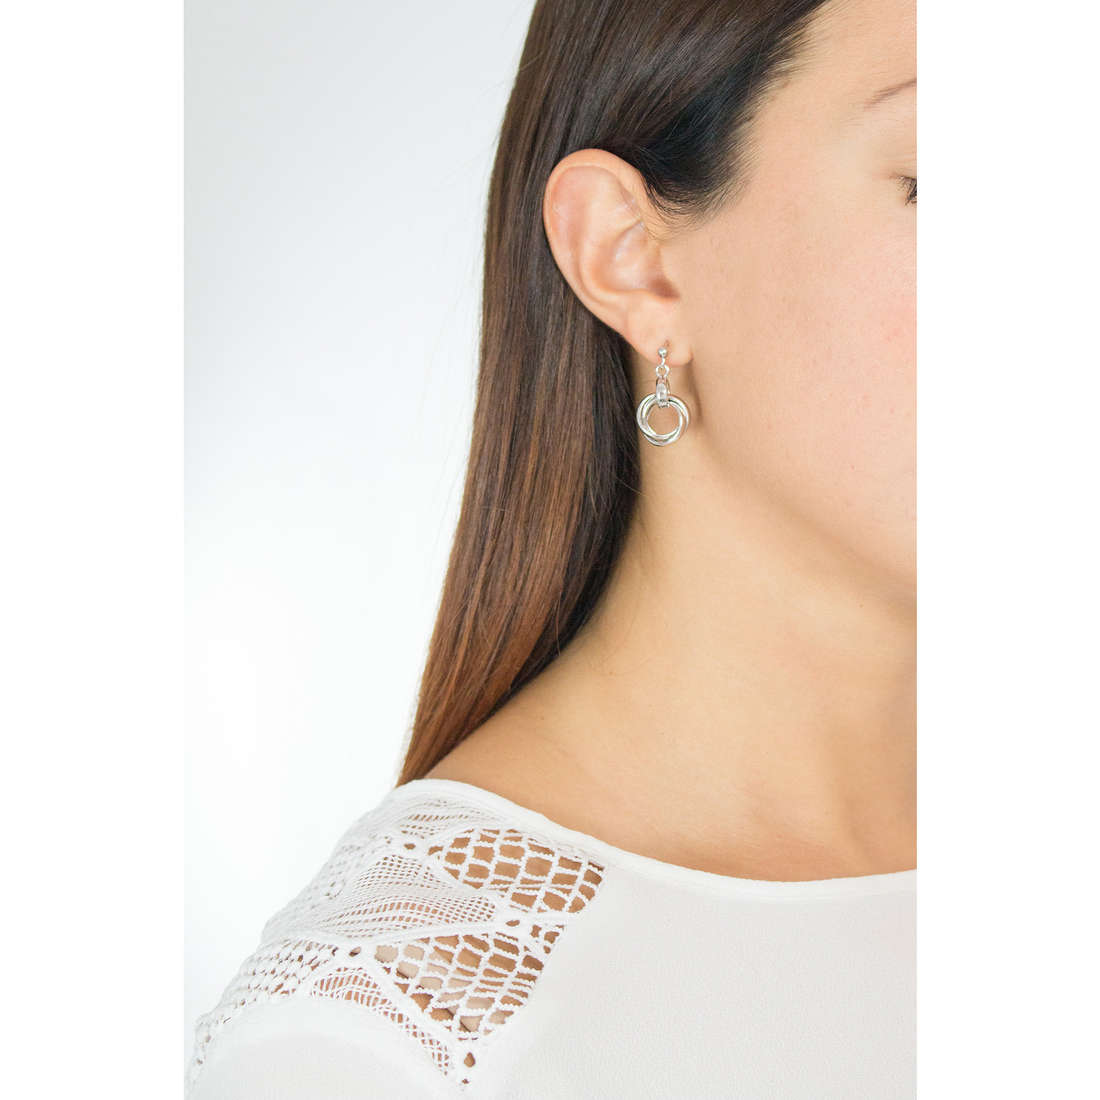 GioiaPura earrings woman GYOARW0141-S wearing